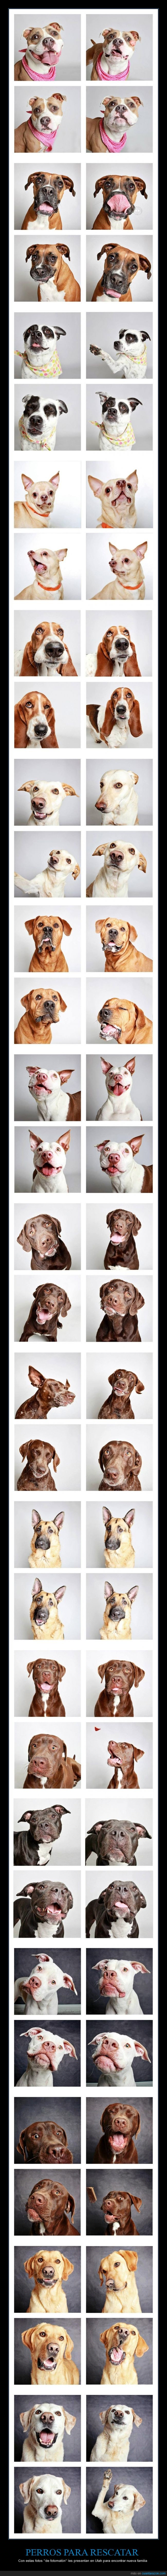 perro,fotomaton,photobooth,Utah,rescue,rescatar,salvar